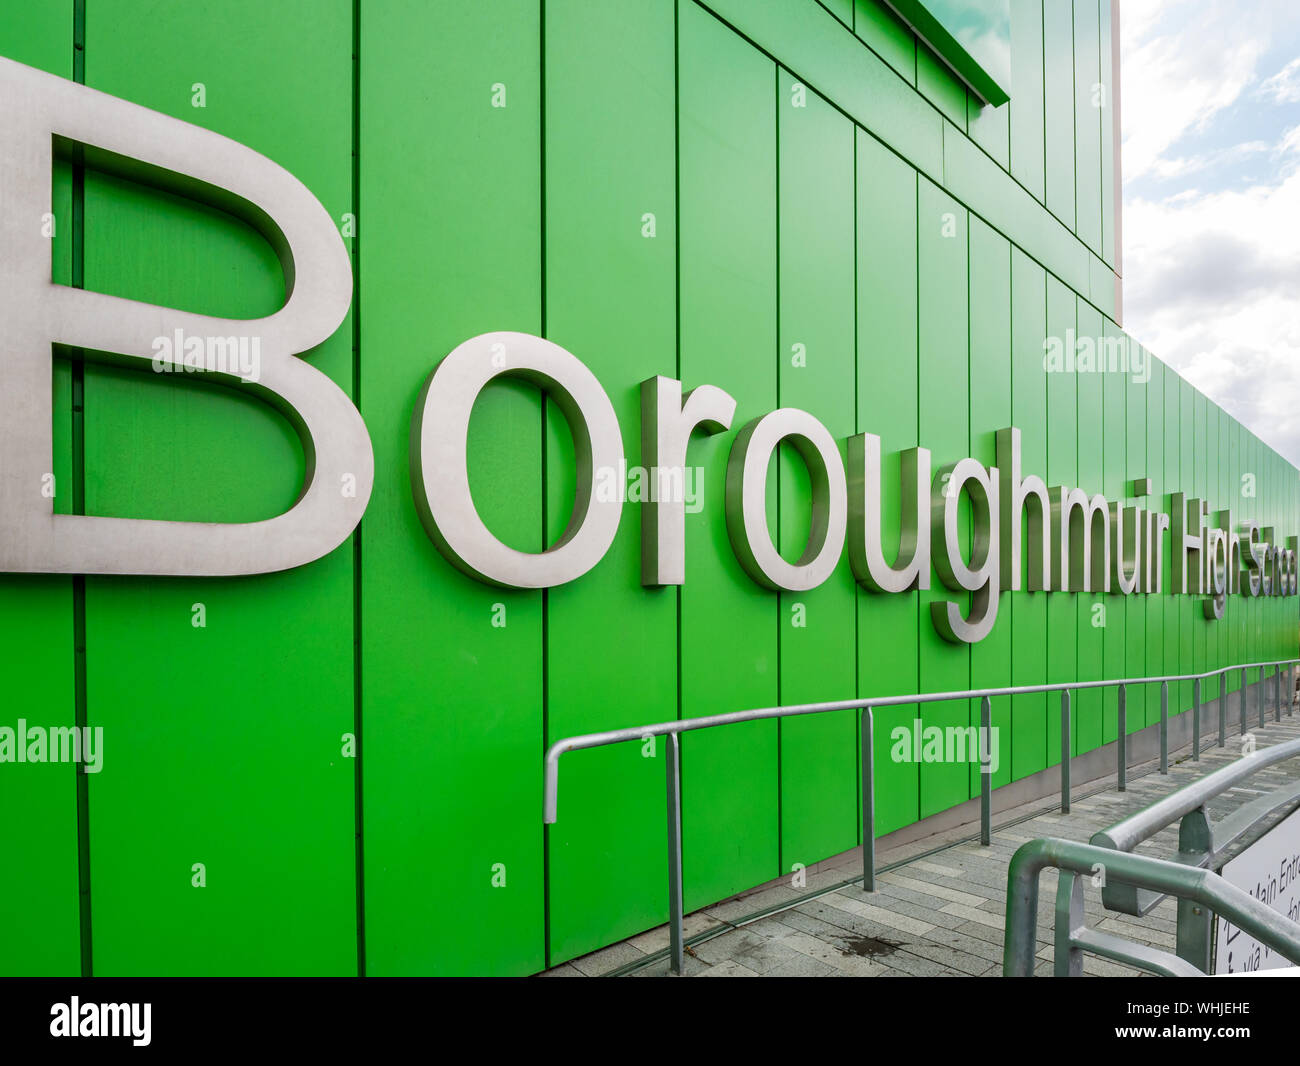 Boroughmuir High School with bold name, new school building opened in 2018, Fountainbridge, Edinburgh, Scotland, UK Stock Photo